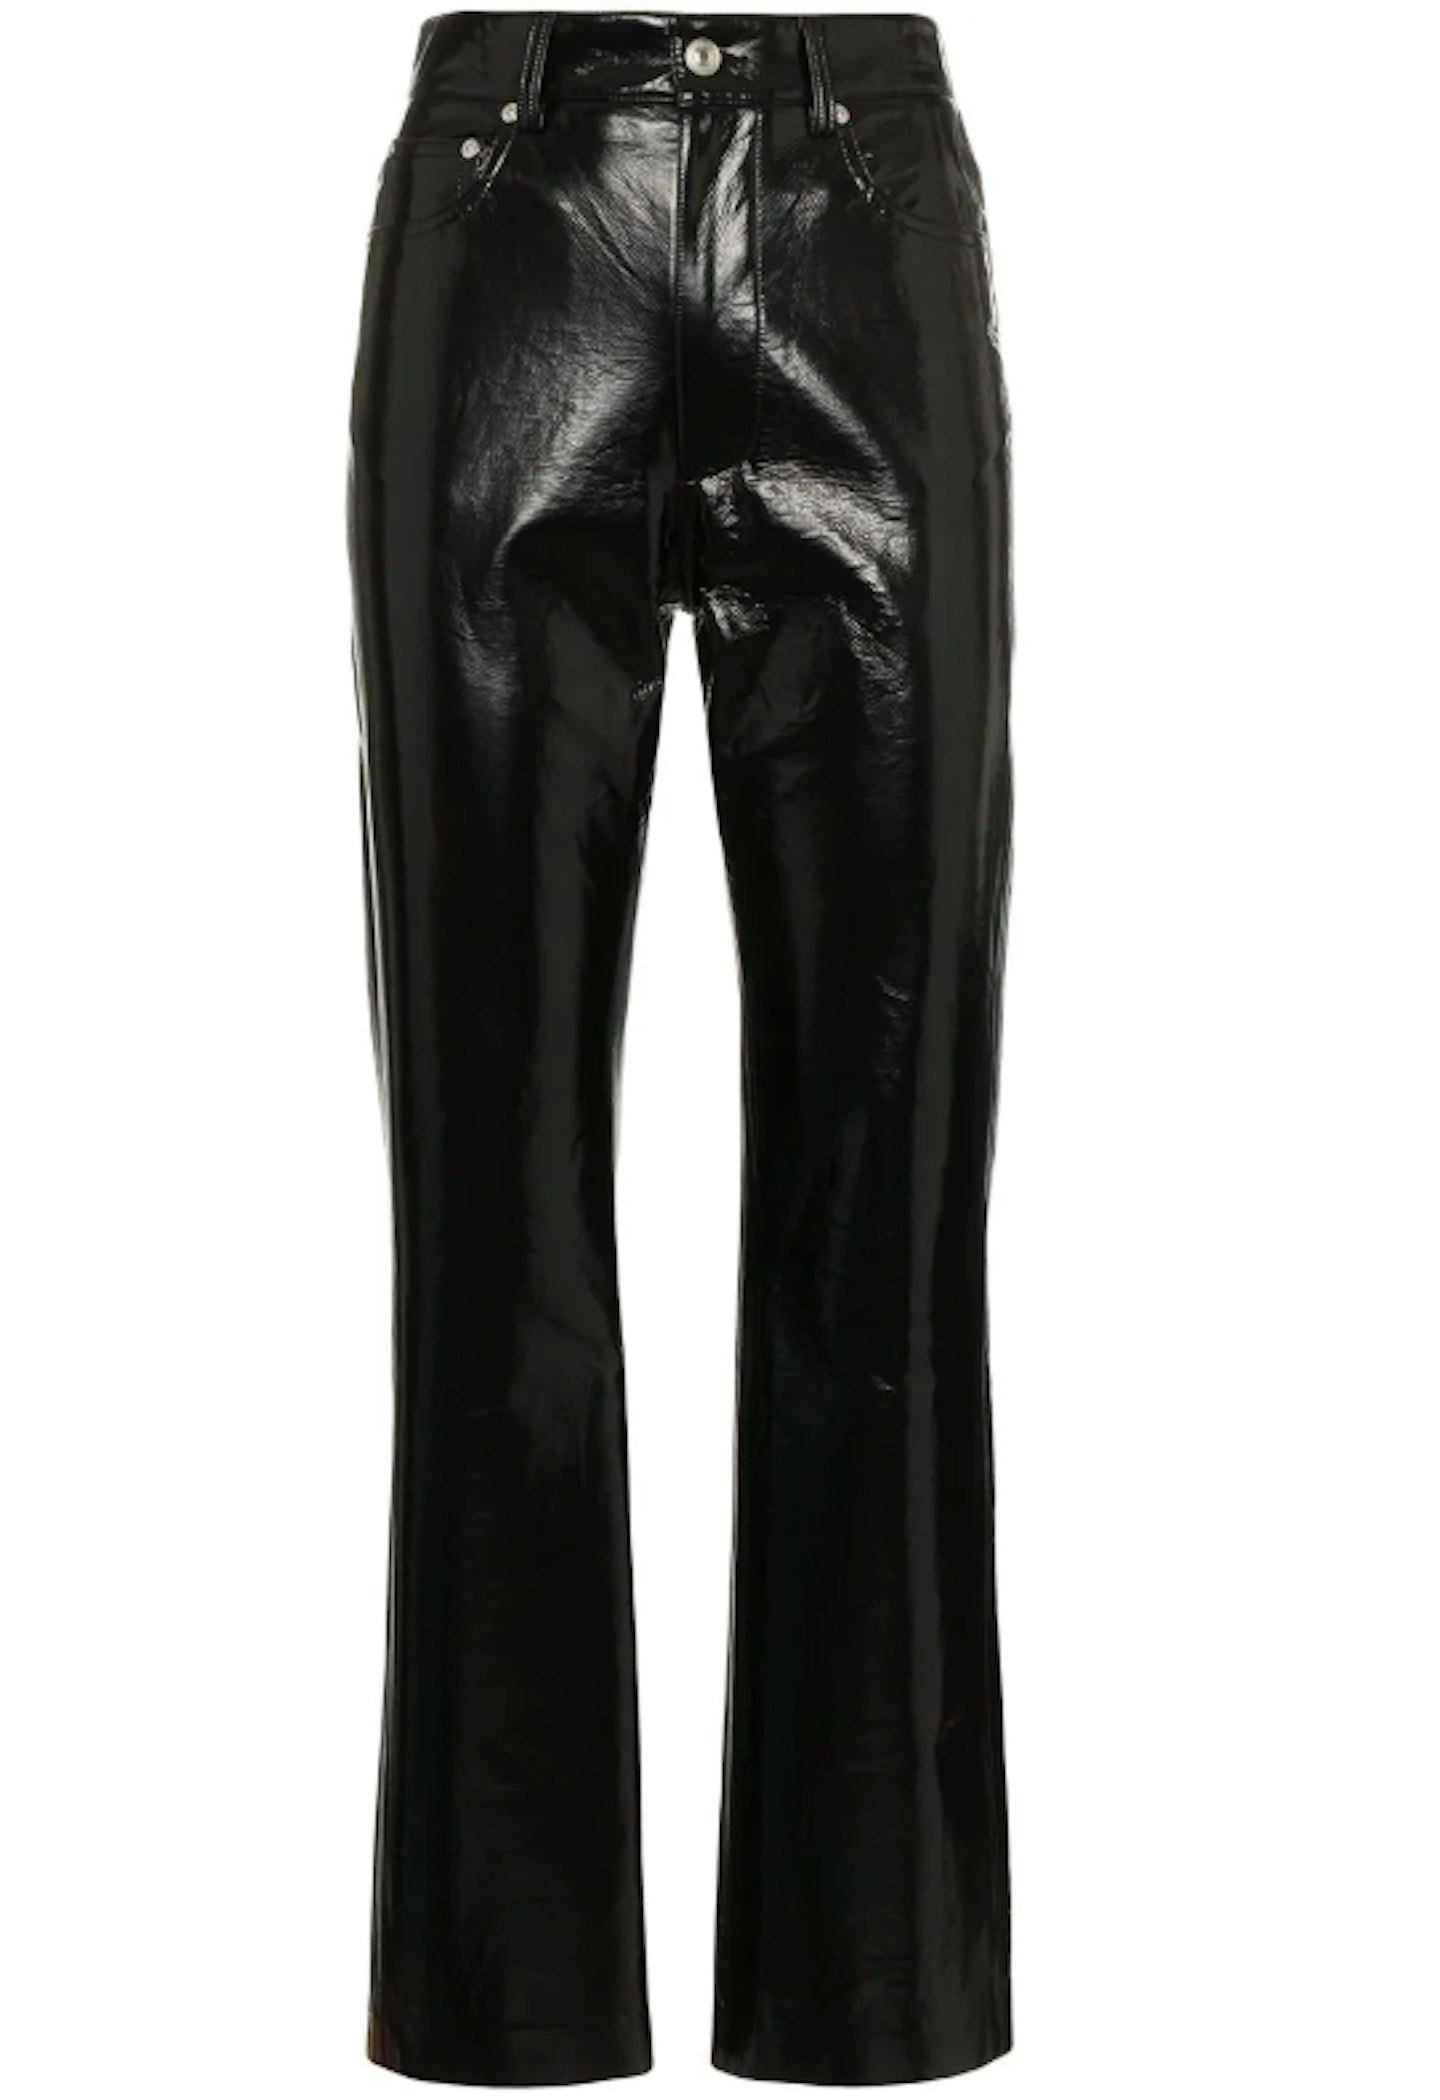 MGSM, High Waisted Vinyl Trousers, £270, Farfetch